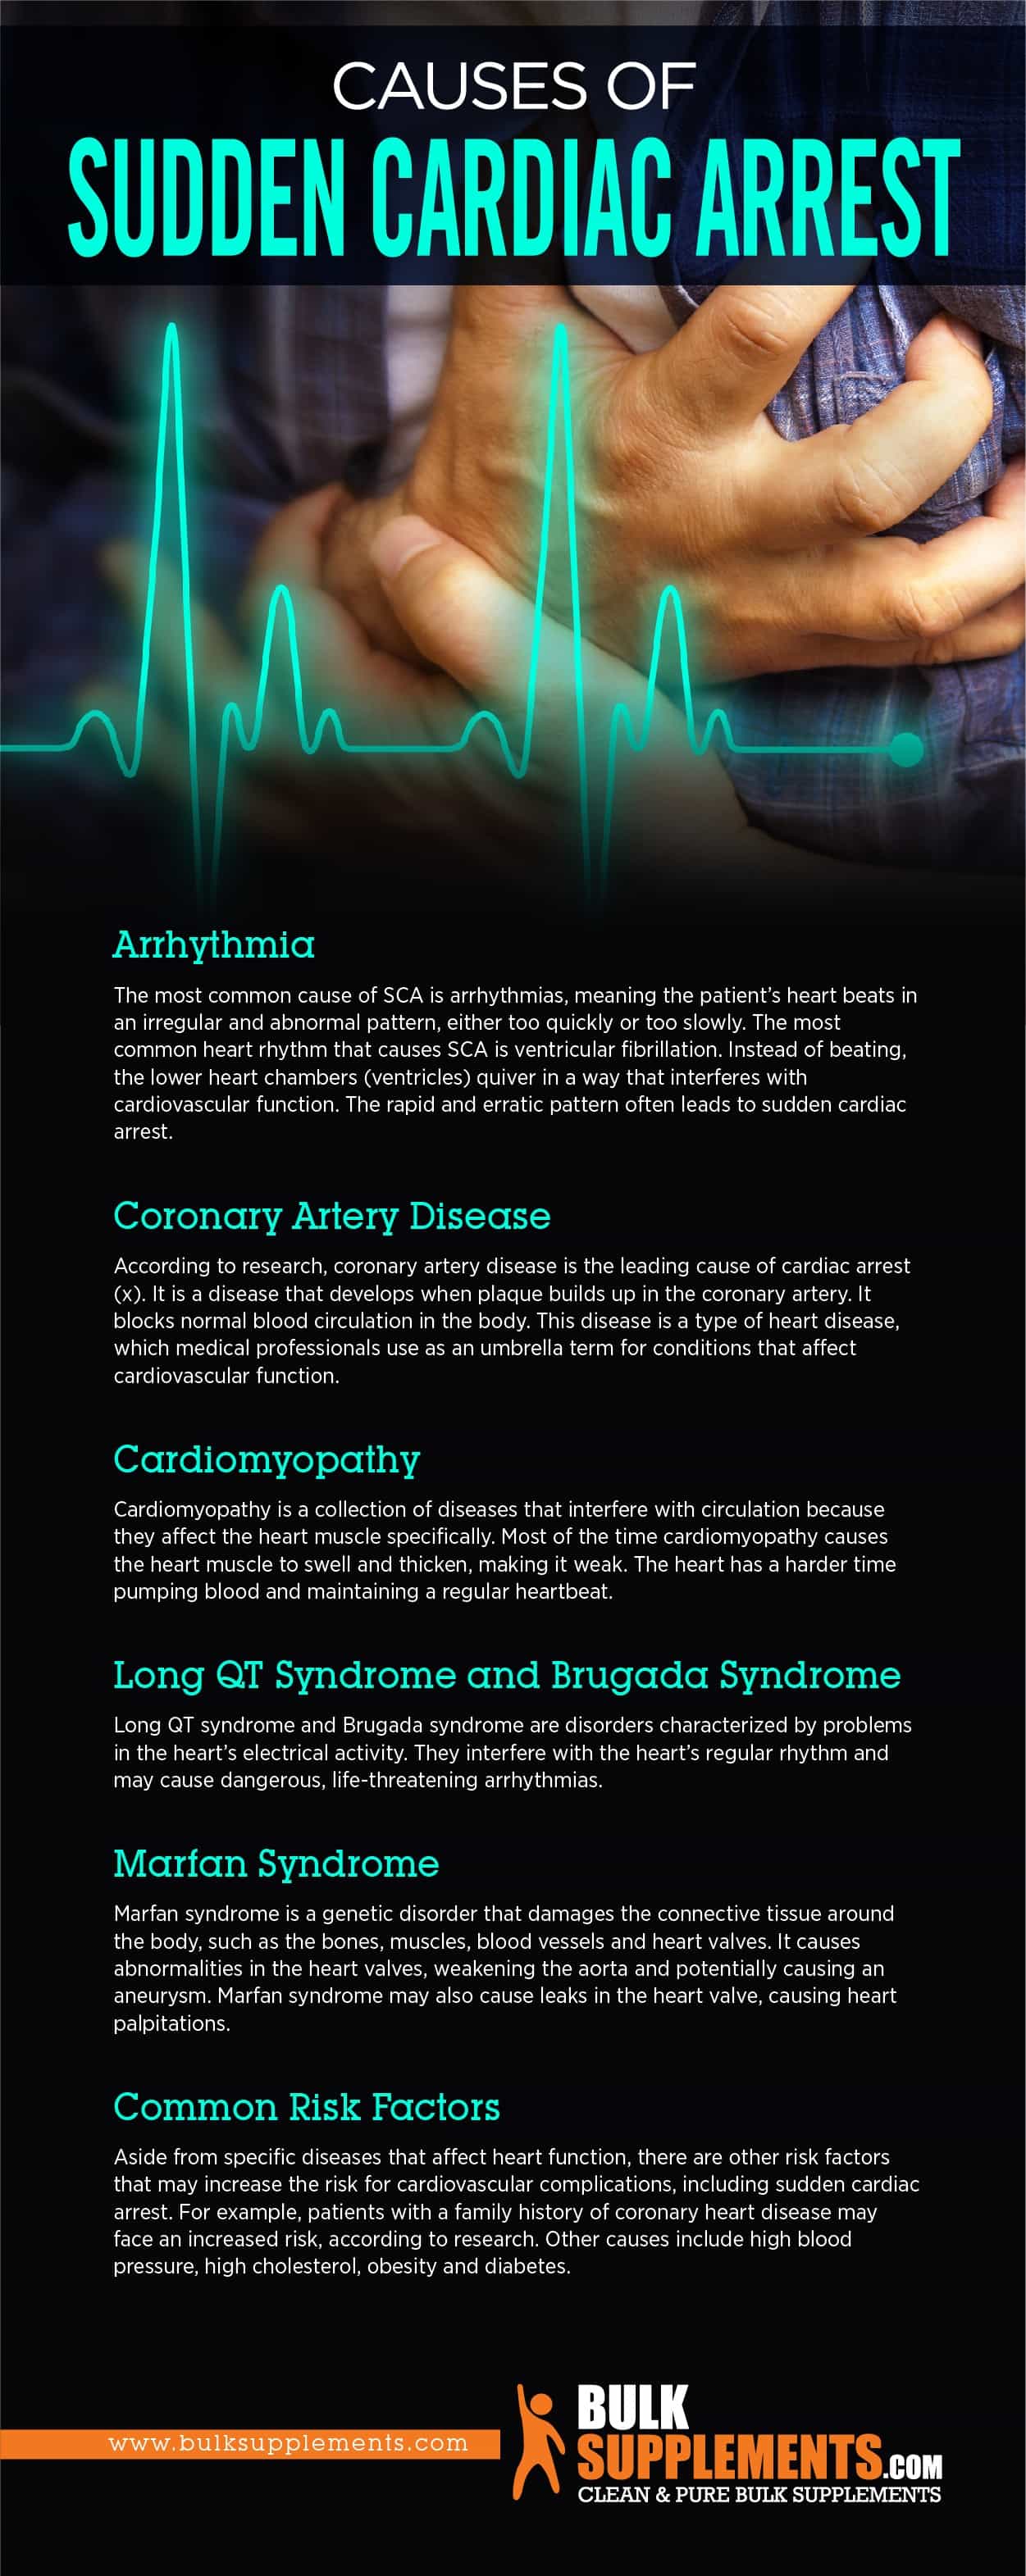 Causes of Sudden Cardiac Arrest